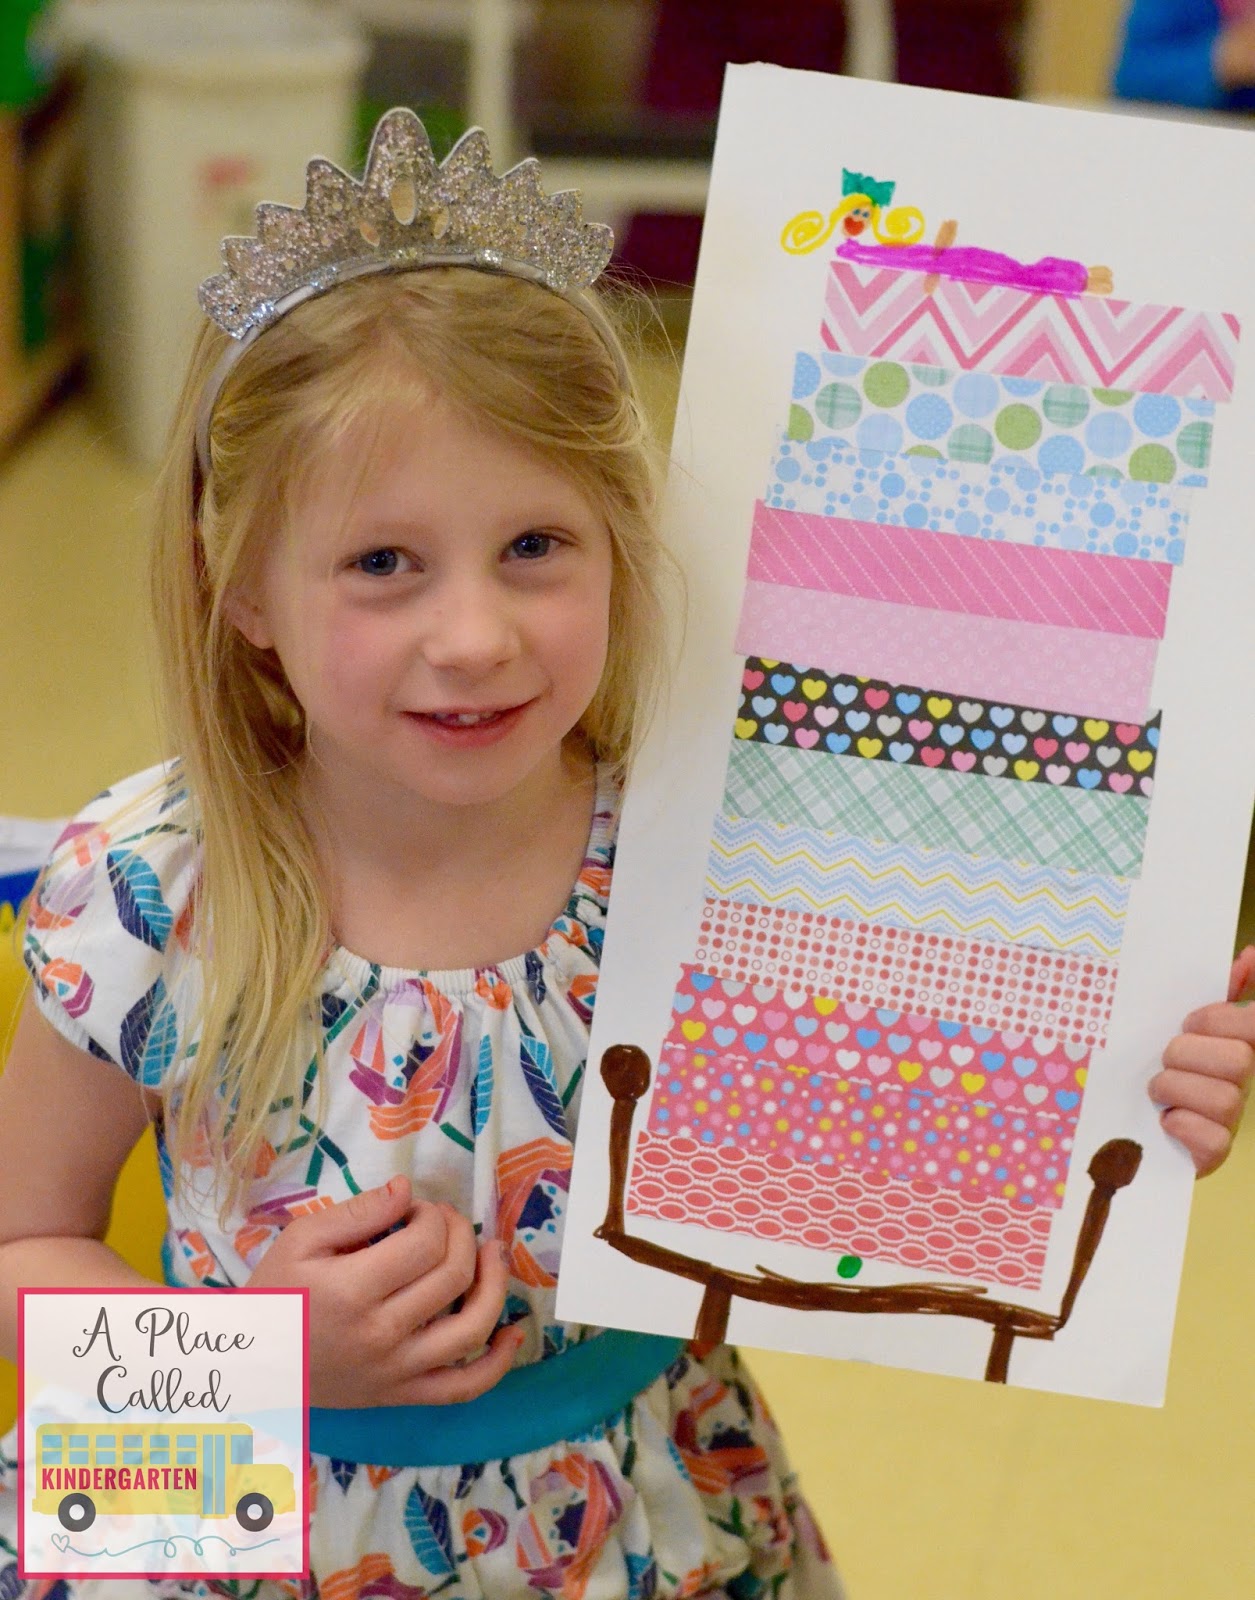 A Place Called Kindergarten: 3 Simple Fairy Tale Crafts